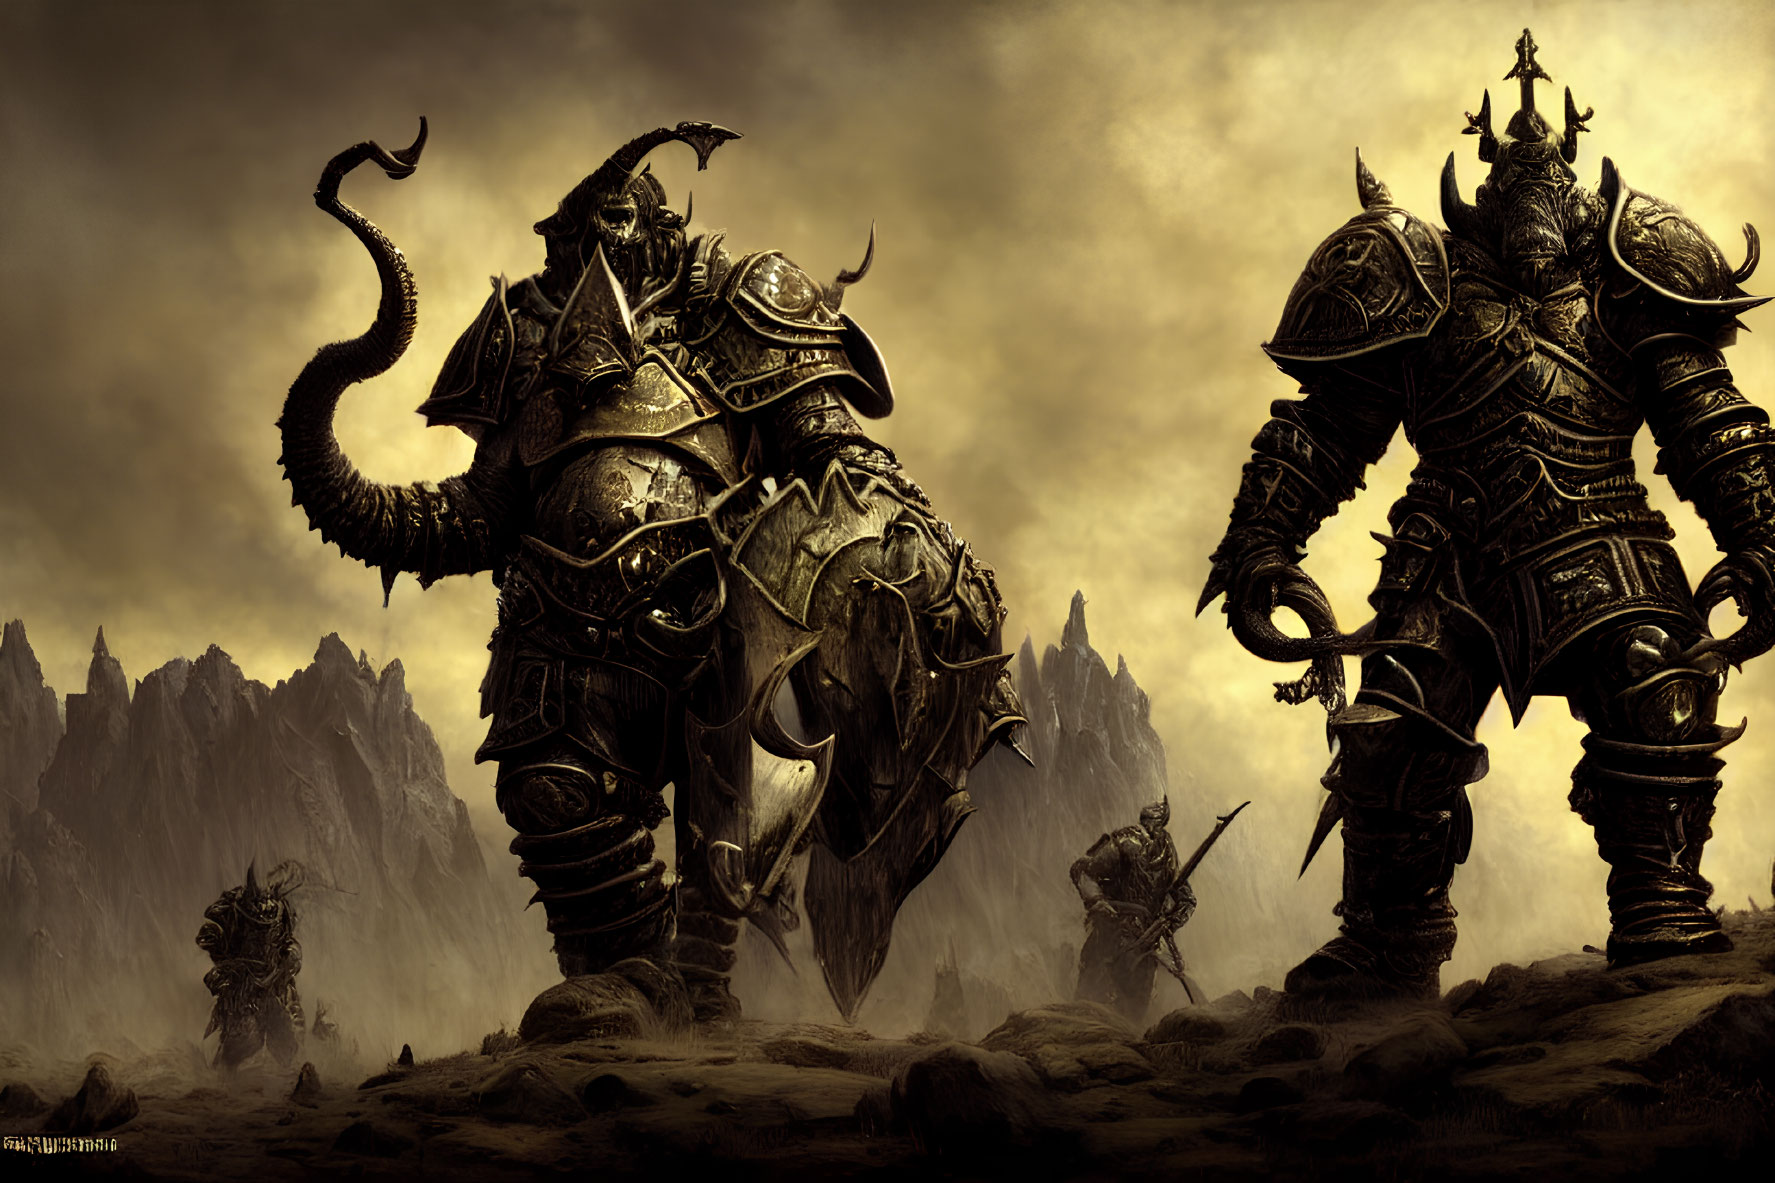 Dark Fantasy Artwork: Ominous Armored Warriors in Foreboding Landscape